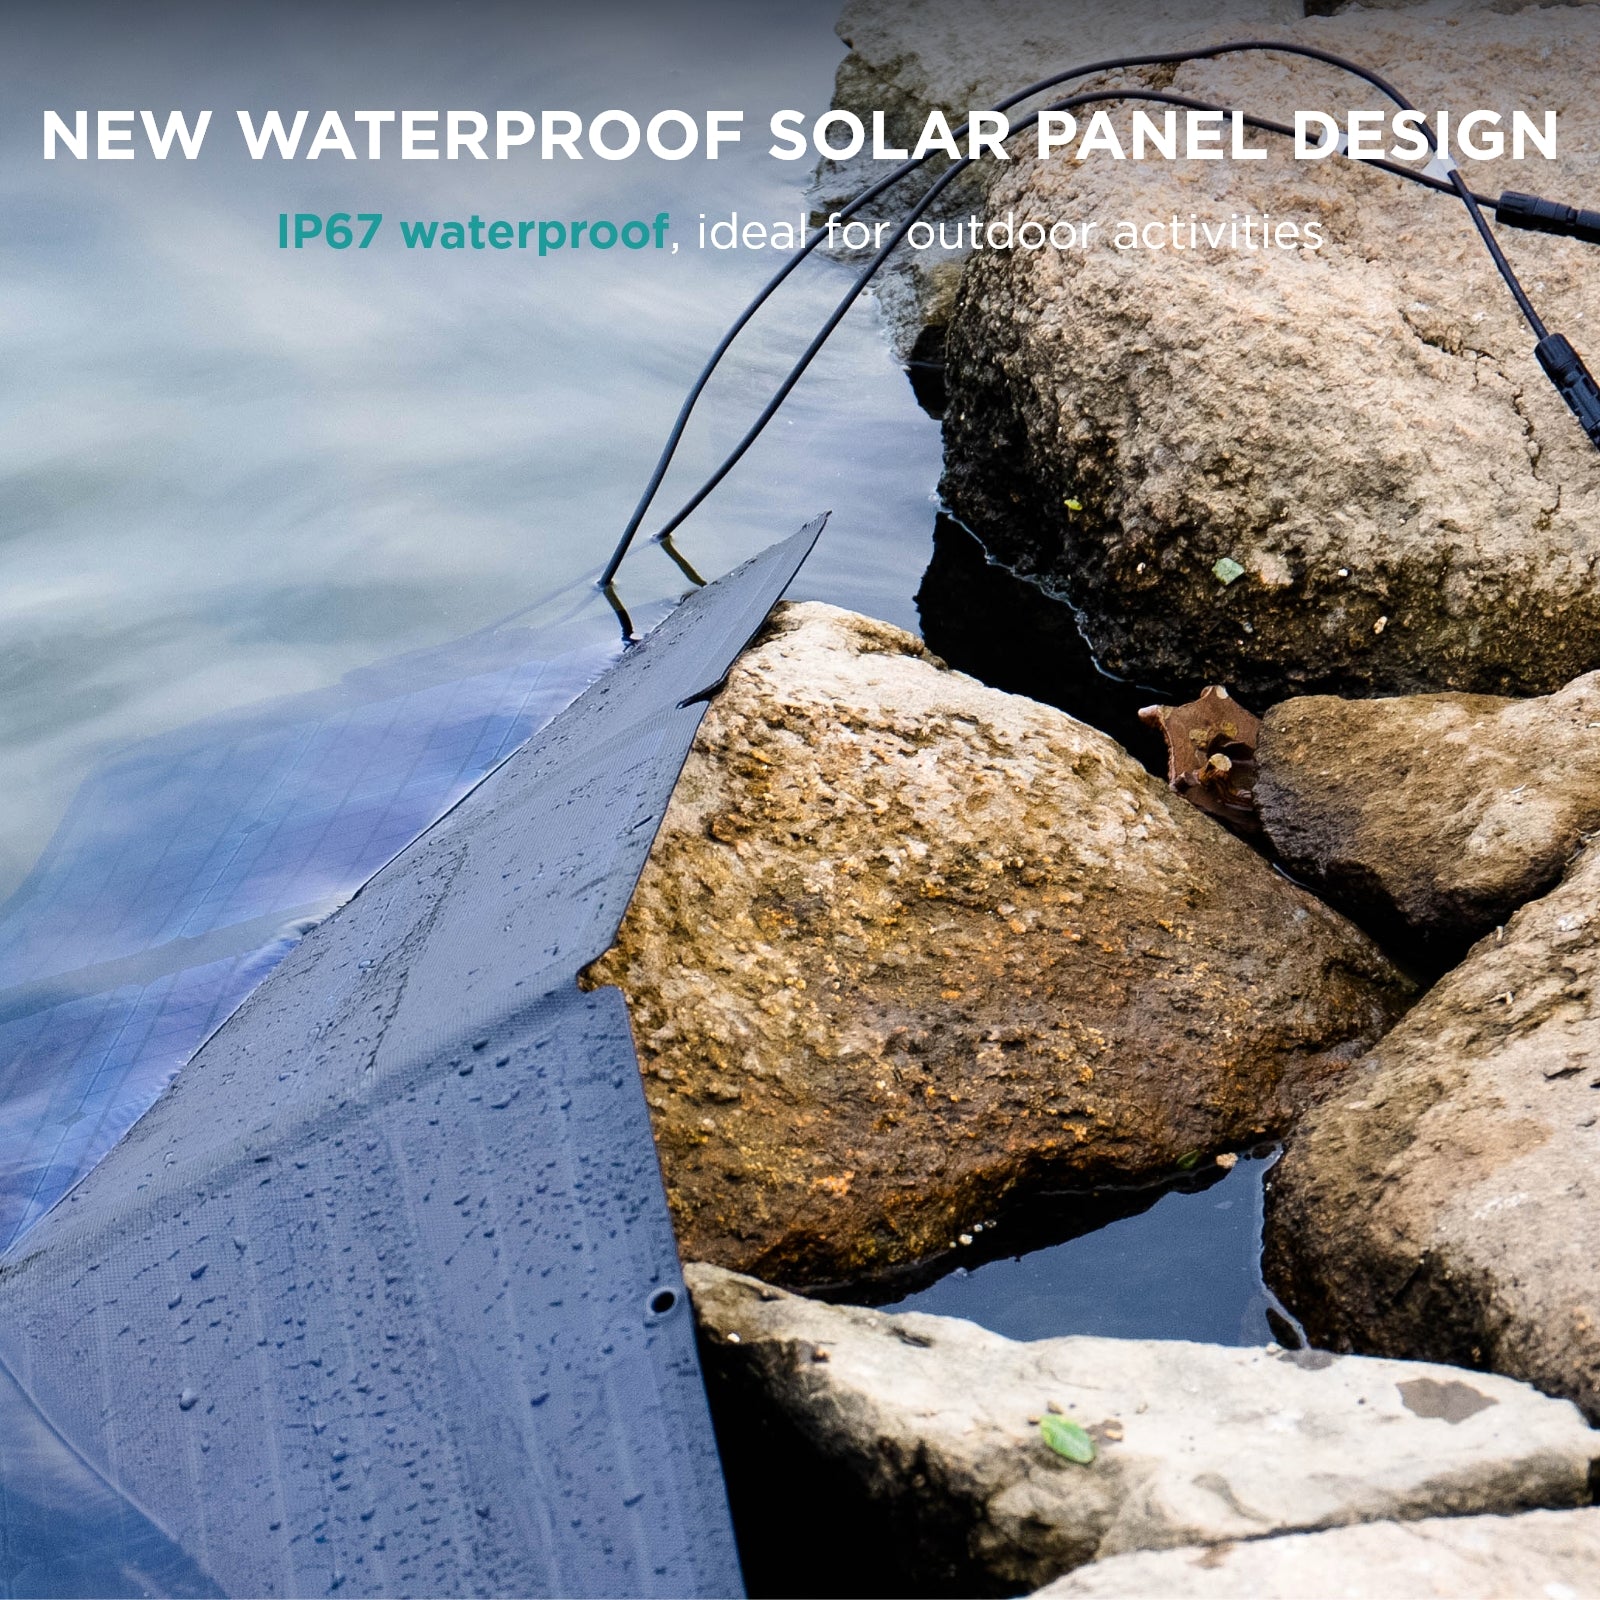 Waterproof panels are ideal for outdoor activities.